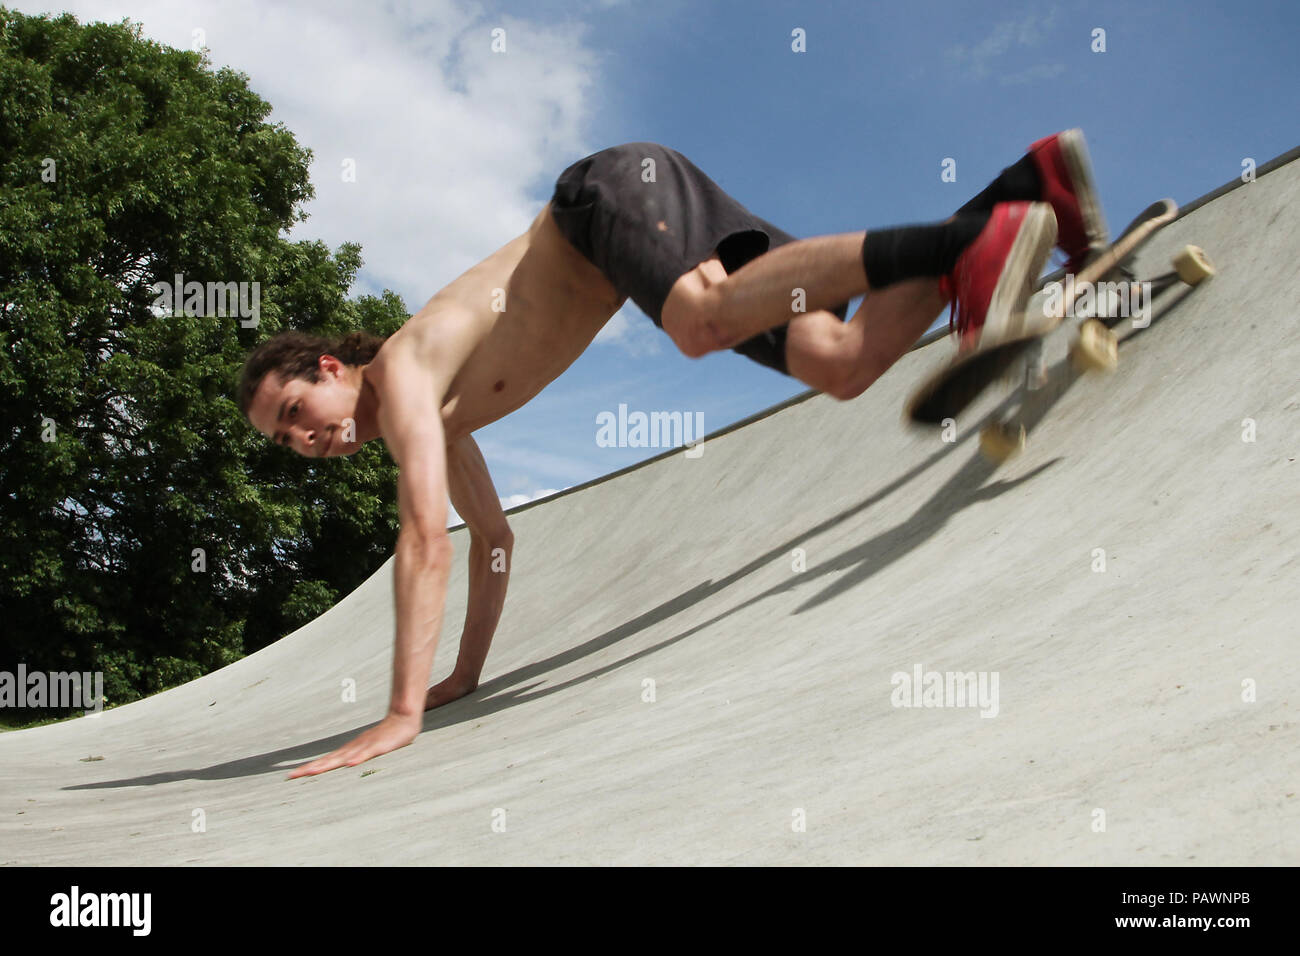 Skateboarding at a skatepark Stock Photo